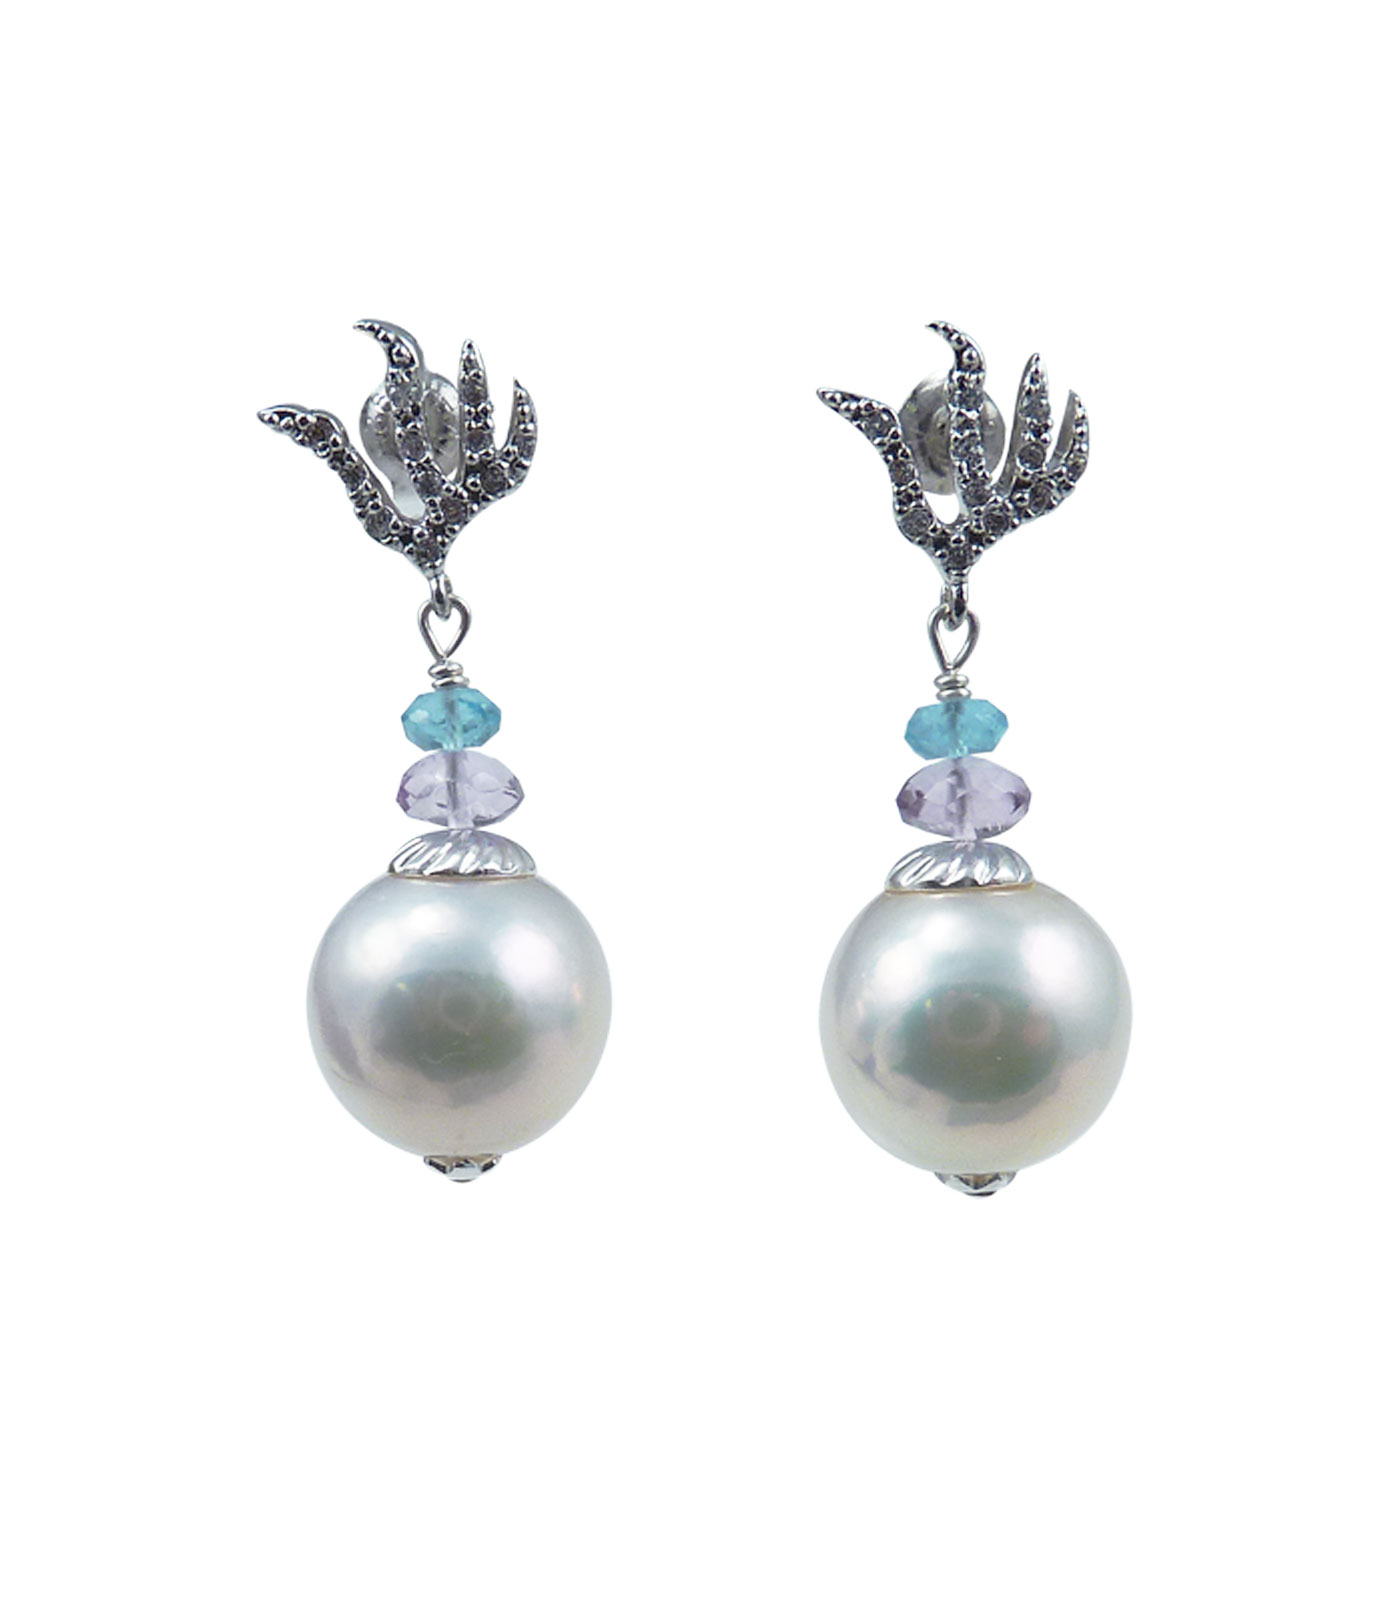 Pearl earrings flame setting, apatite,amethyst. Modern pearl jewelry